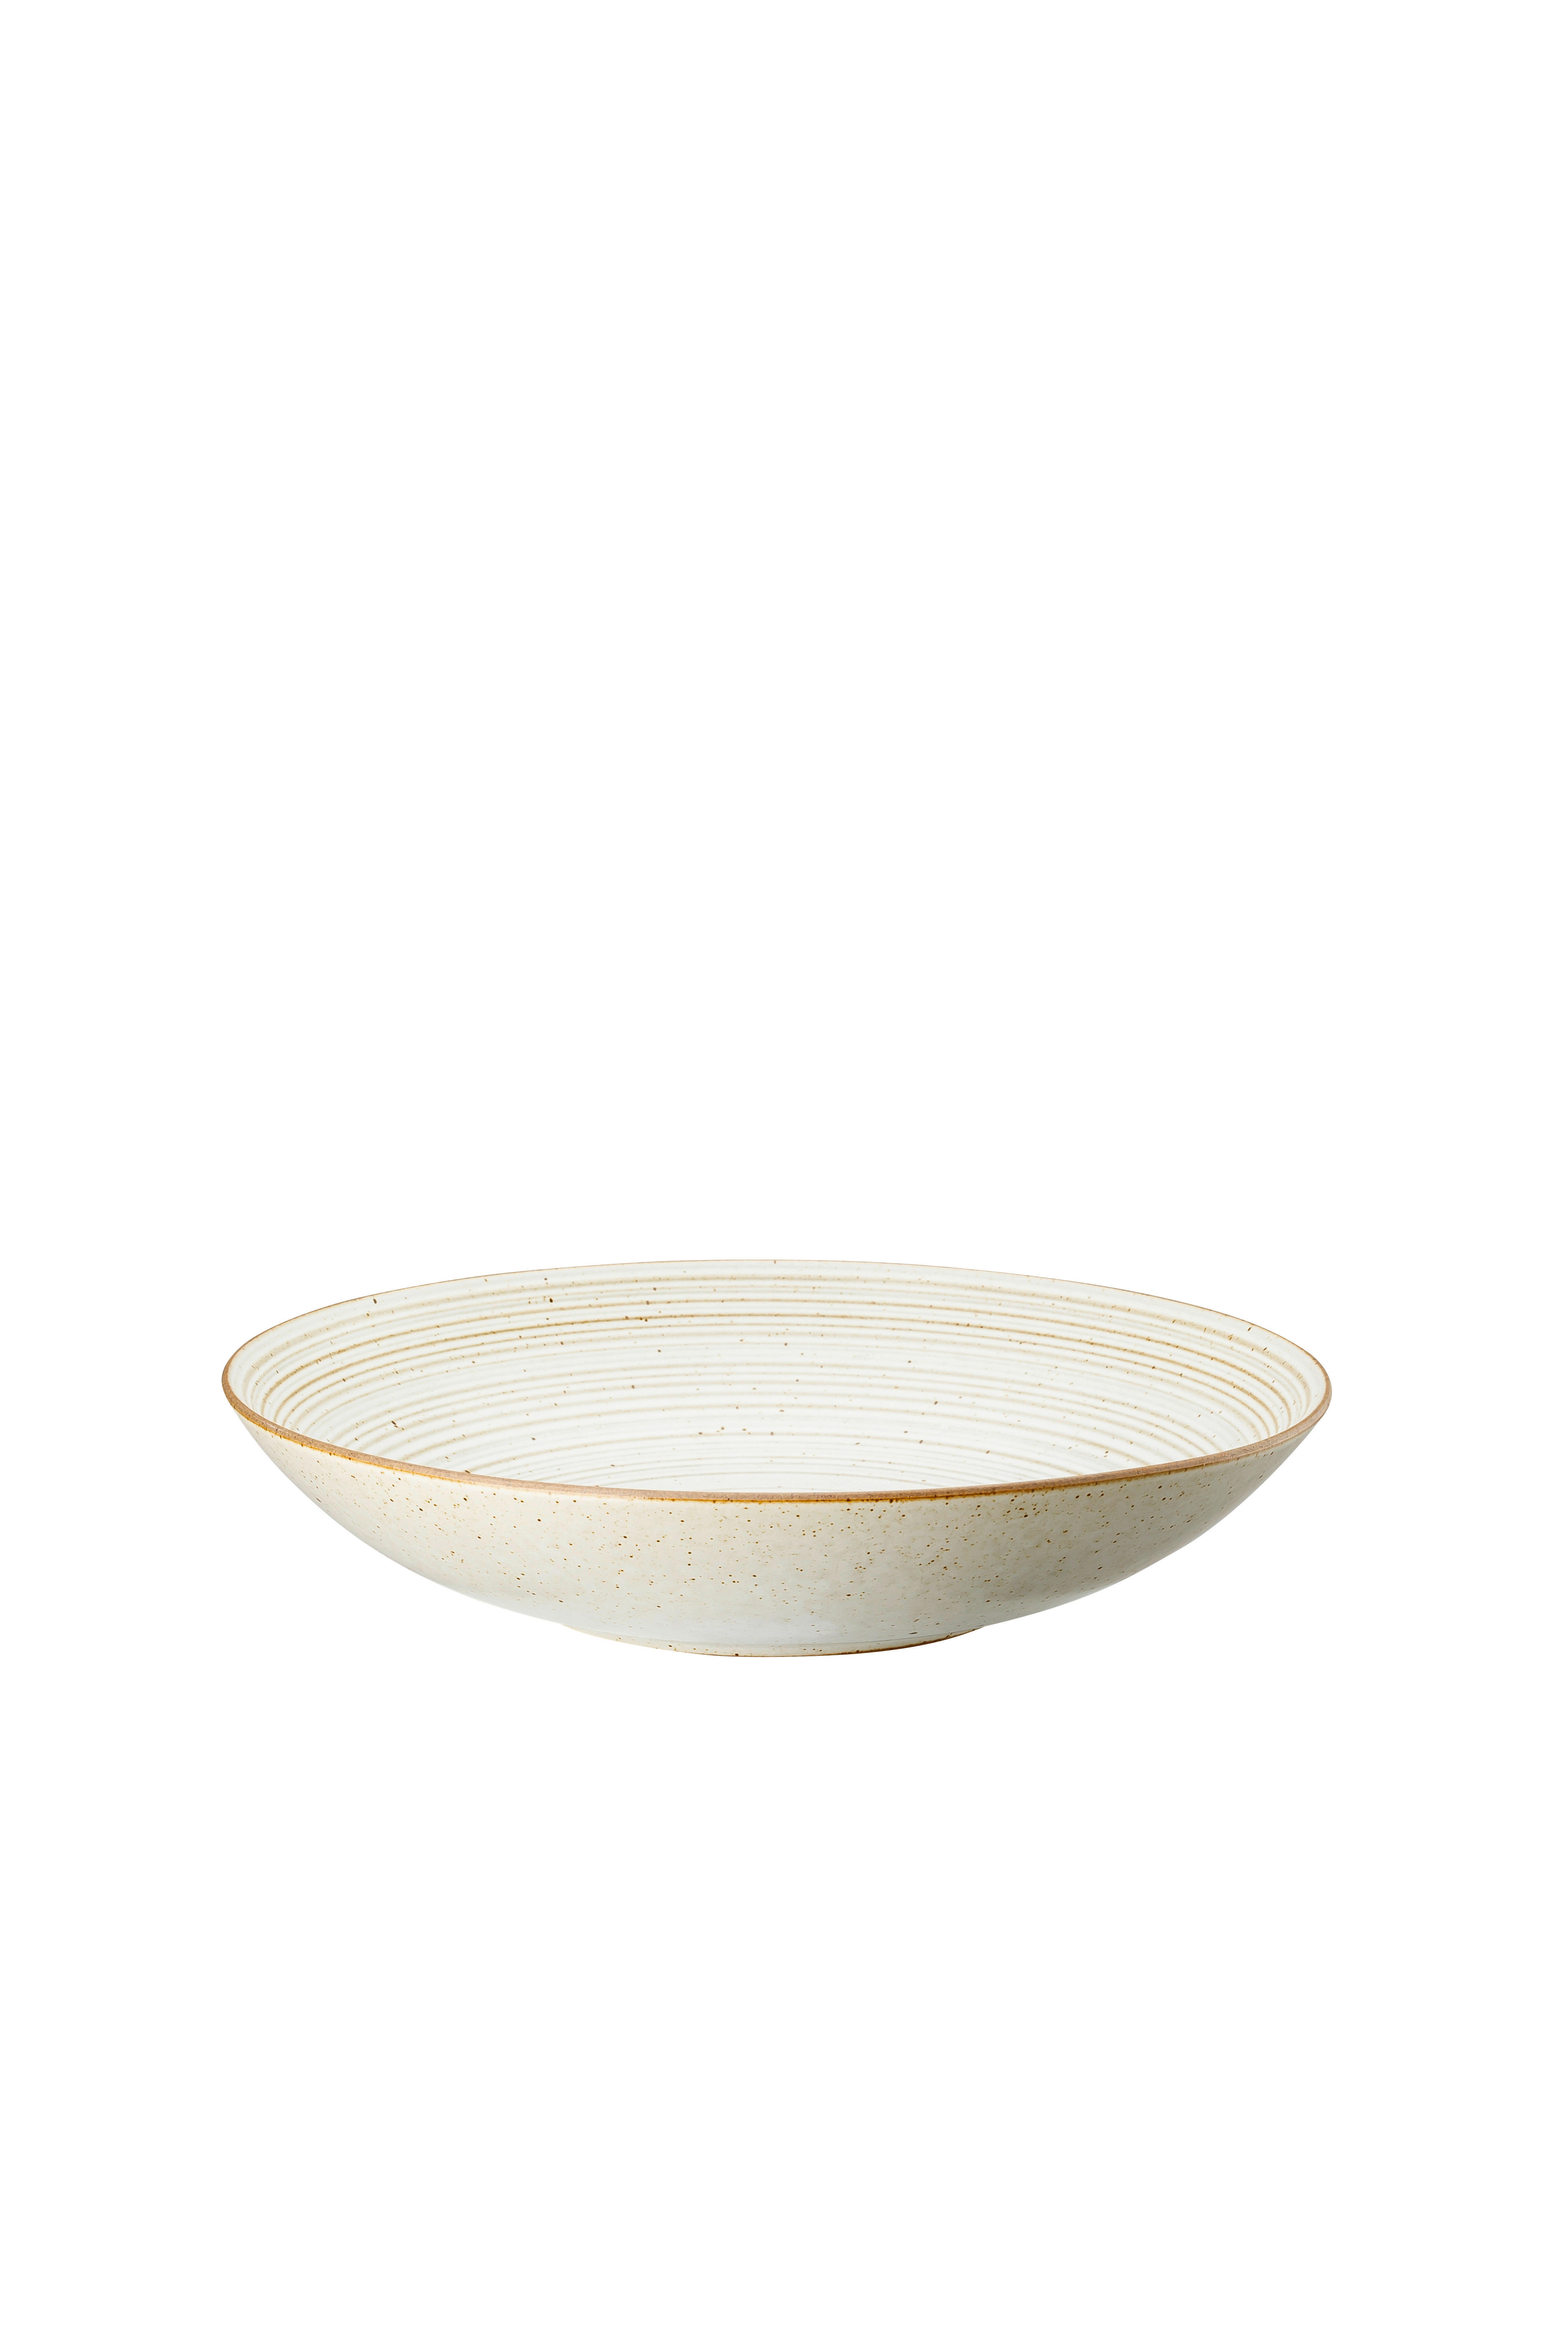 DUBOKI TANJIR  23 cm        - boja peska, Osnovno, keramika (23cm) - Rosenthal